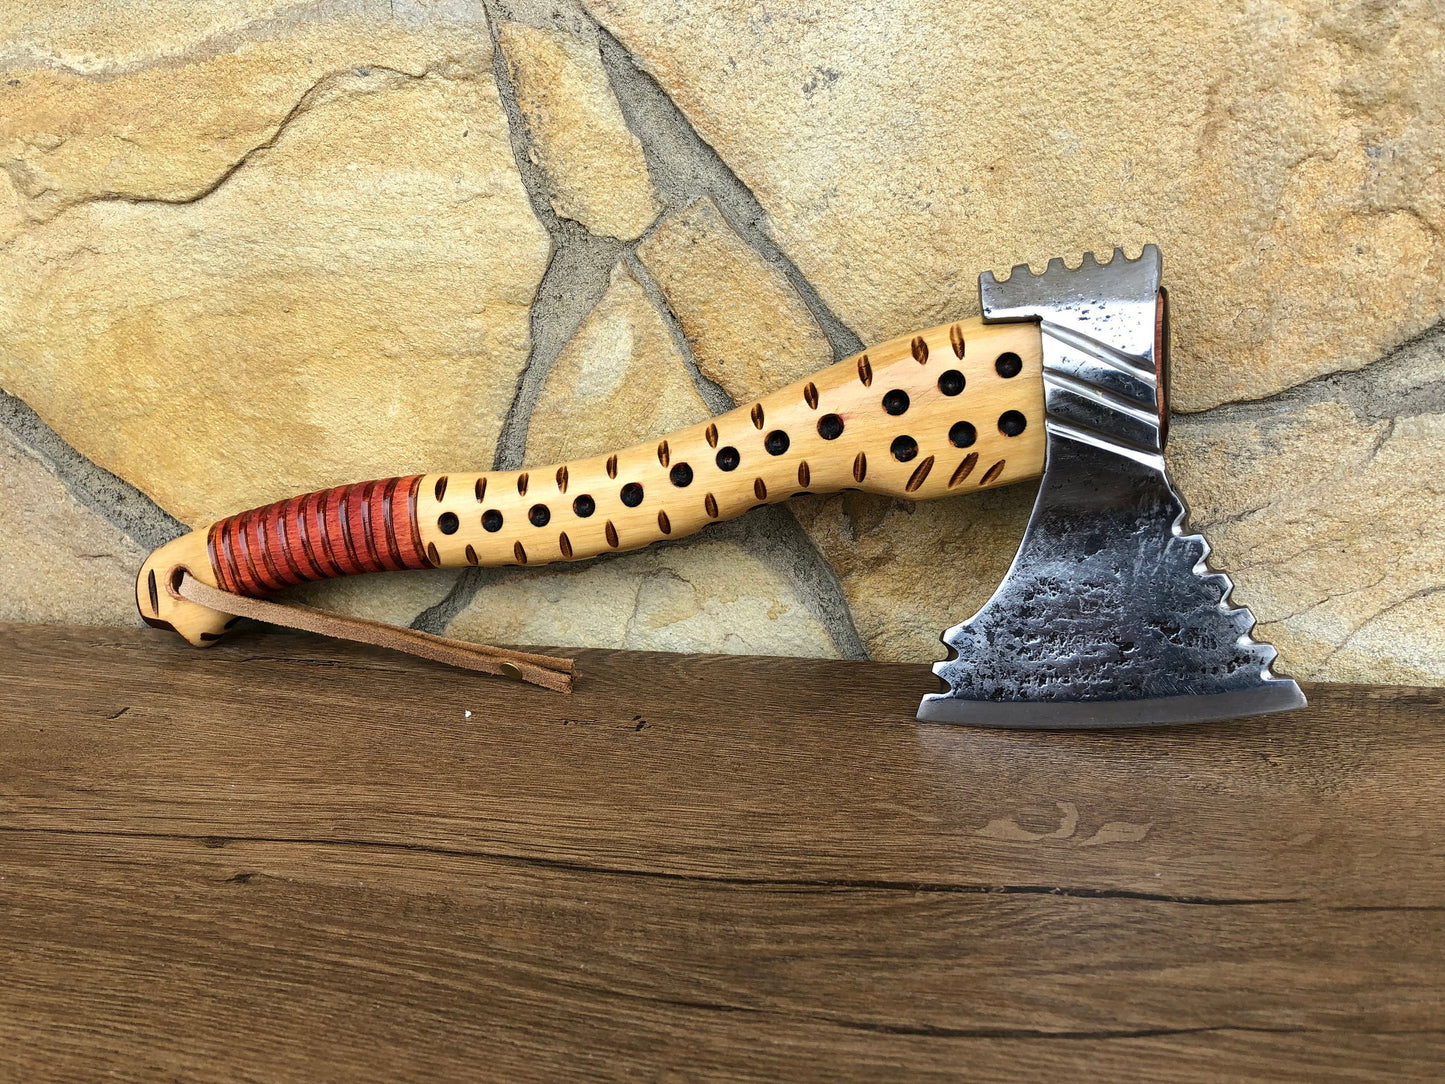 Handyman gifts, handyman tools, viking axe, tomahawk, hatchet, mens gifts, medieval axe, viking weapons, axe, viking camp kit, iron gifts